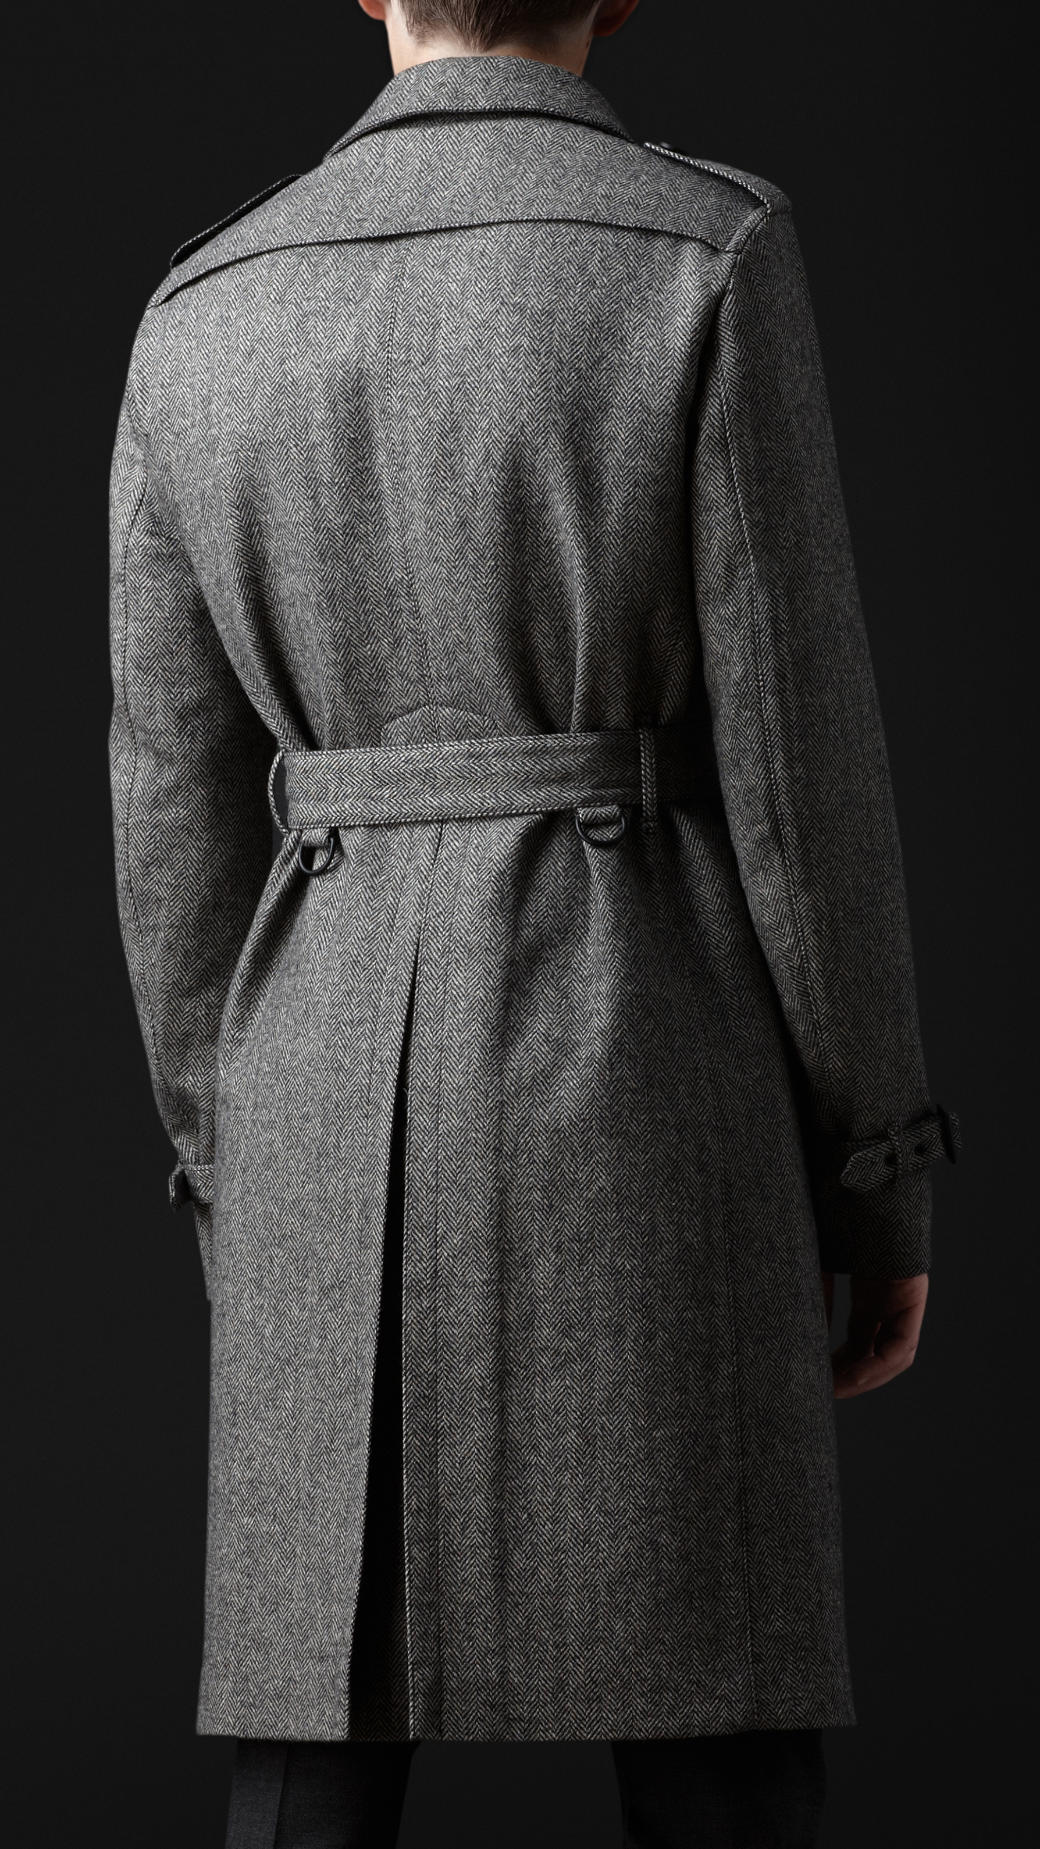 Lyst - Burberry Prorsum Herringbone Wool Trench Coat in Gray for Men